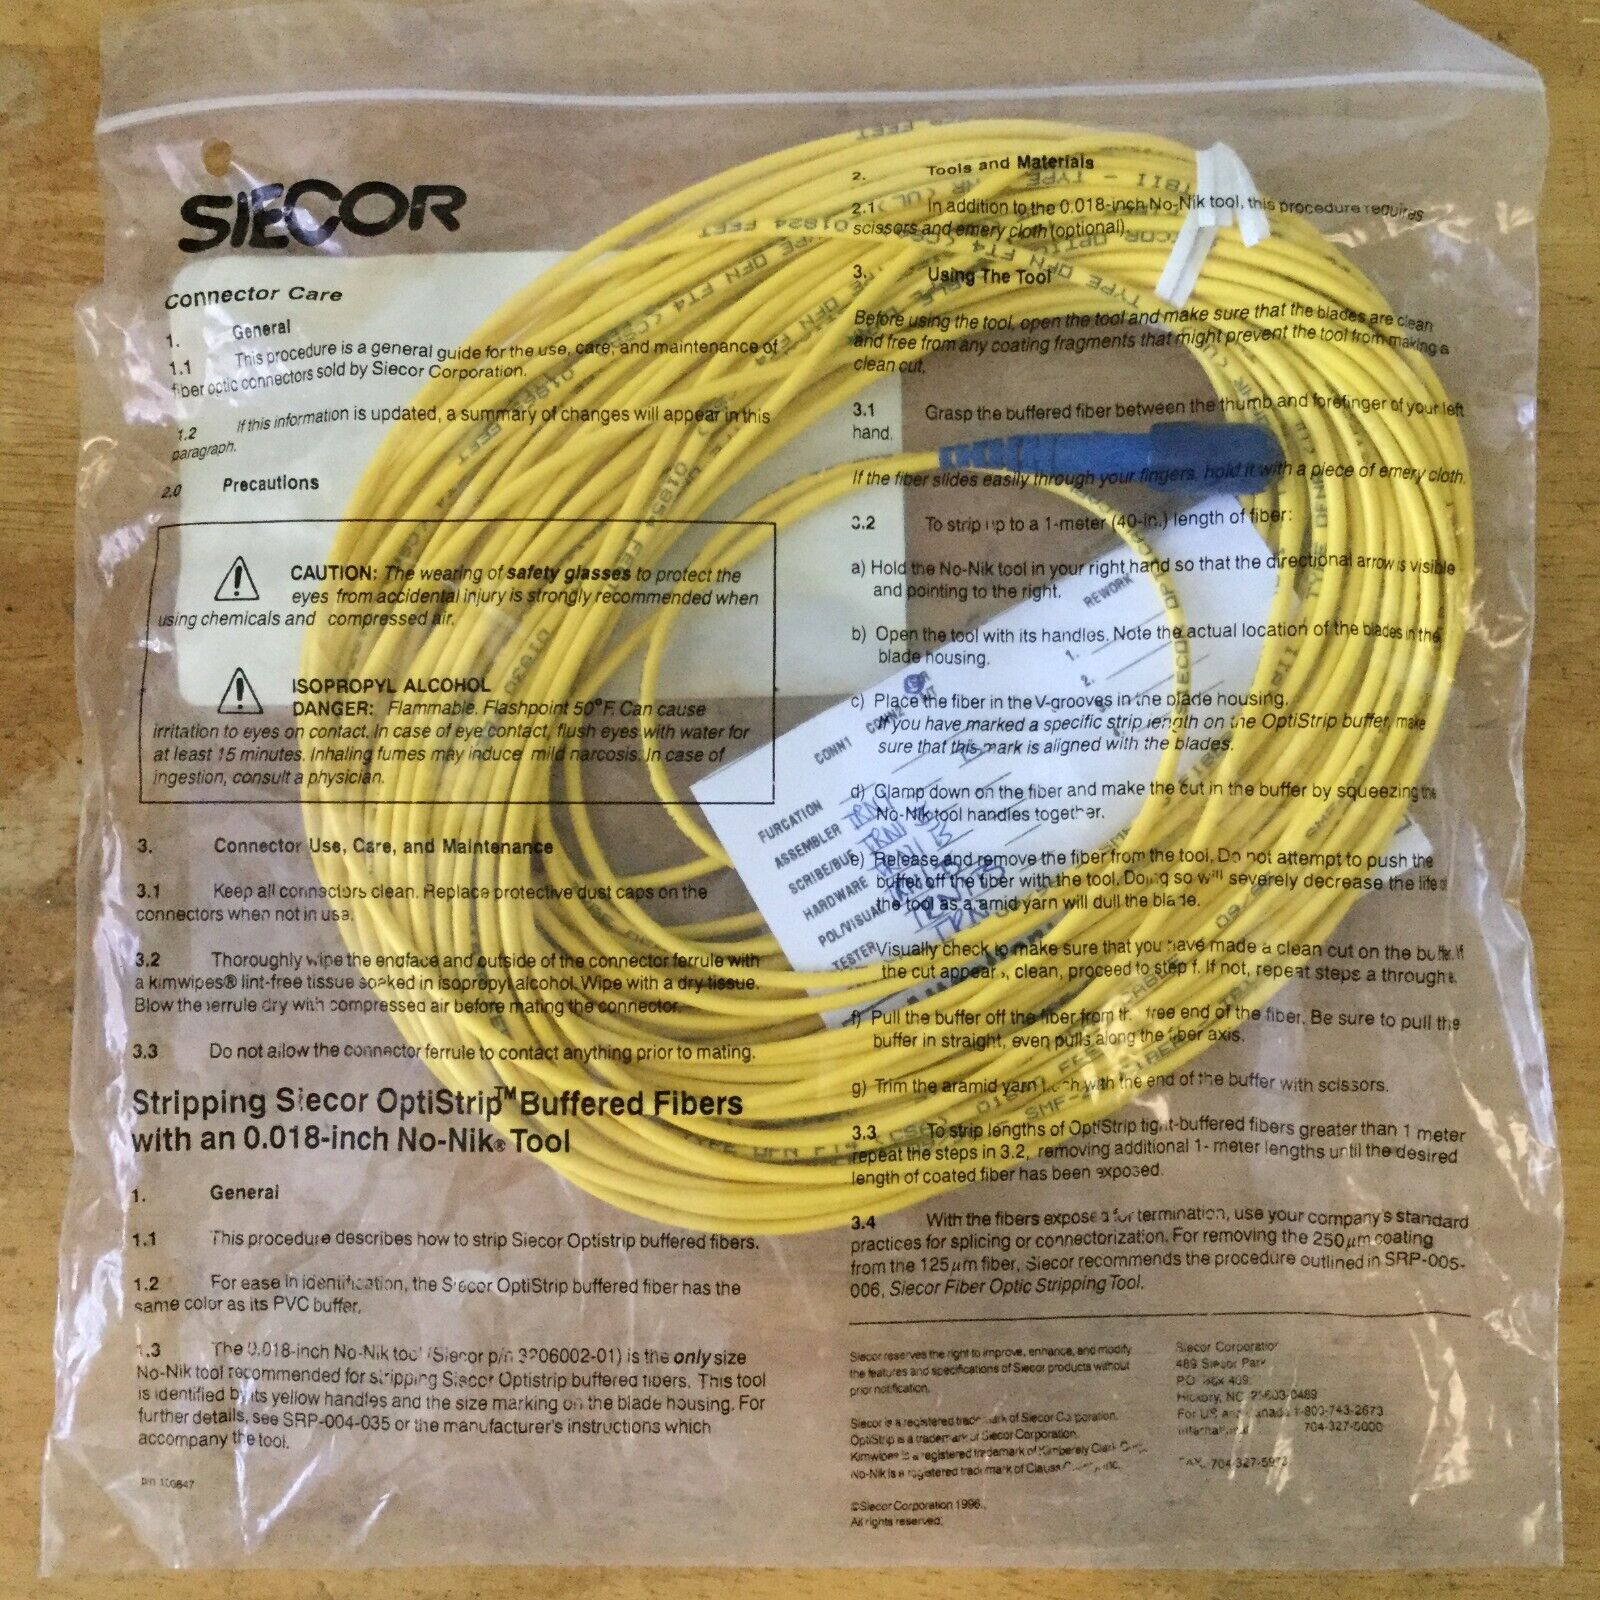 Siecor/Corning Fiber Optic Patch Cord Jumper Cable 1F SFC D4/D4 (D4UPS) - 75 FT